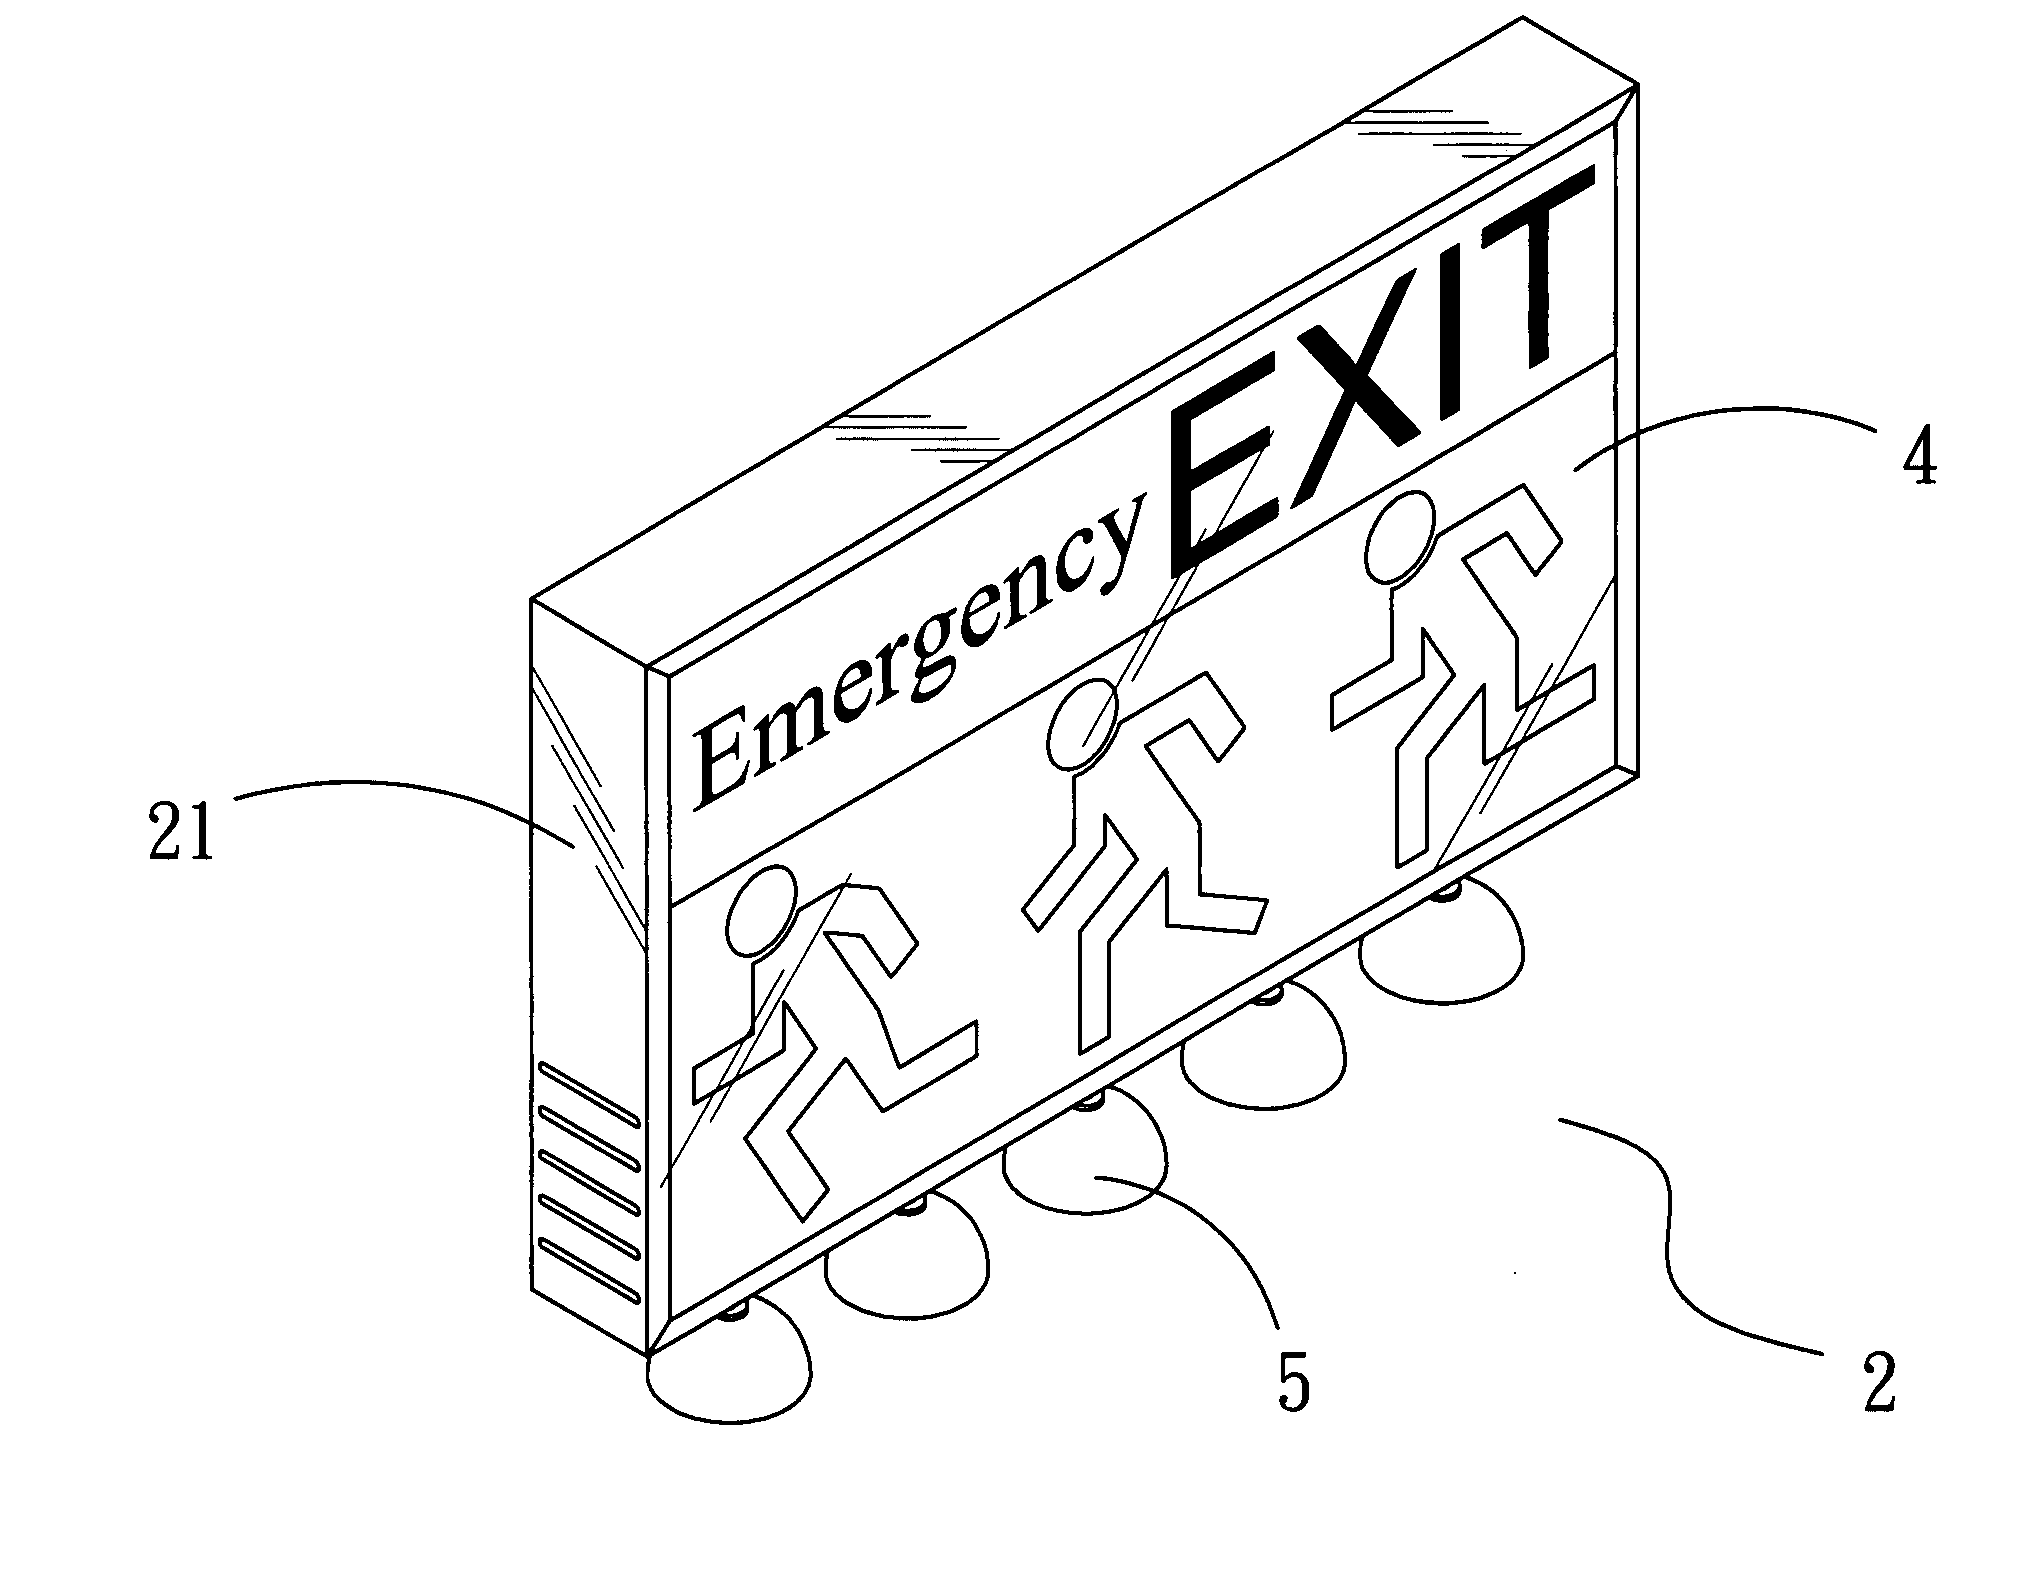 Dynamic emergency escape indicator